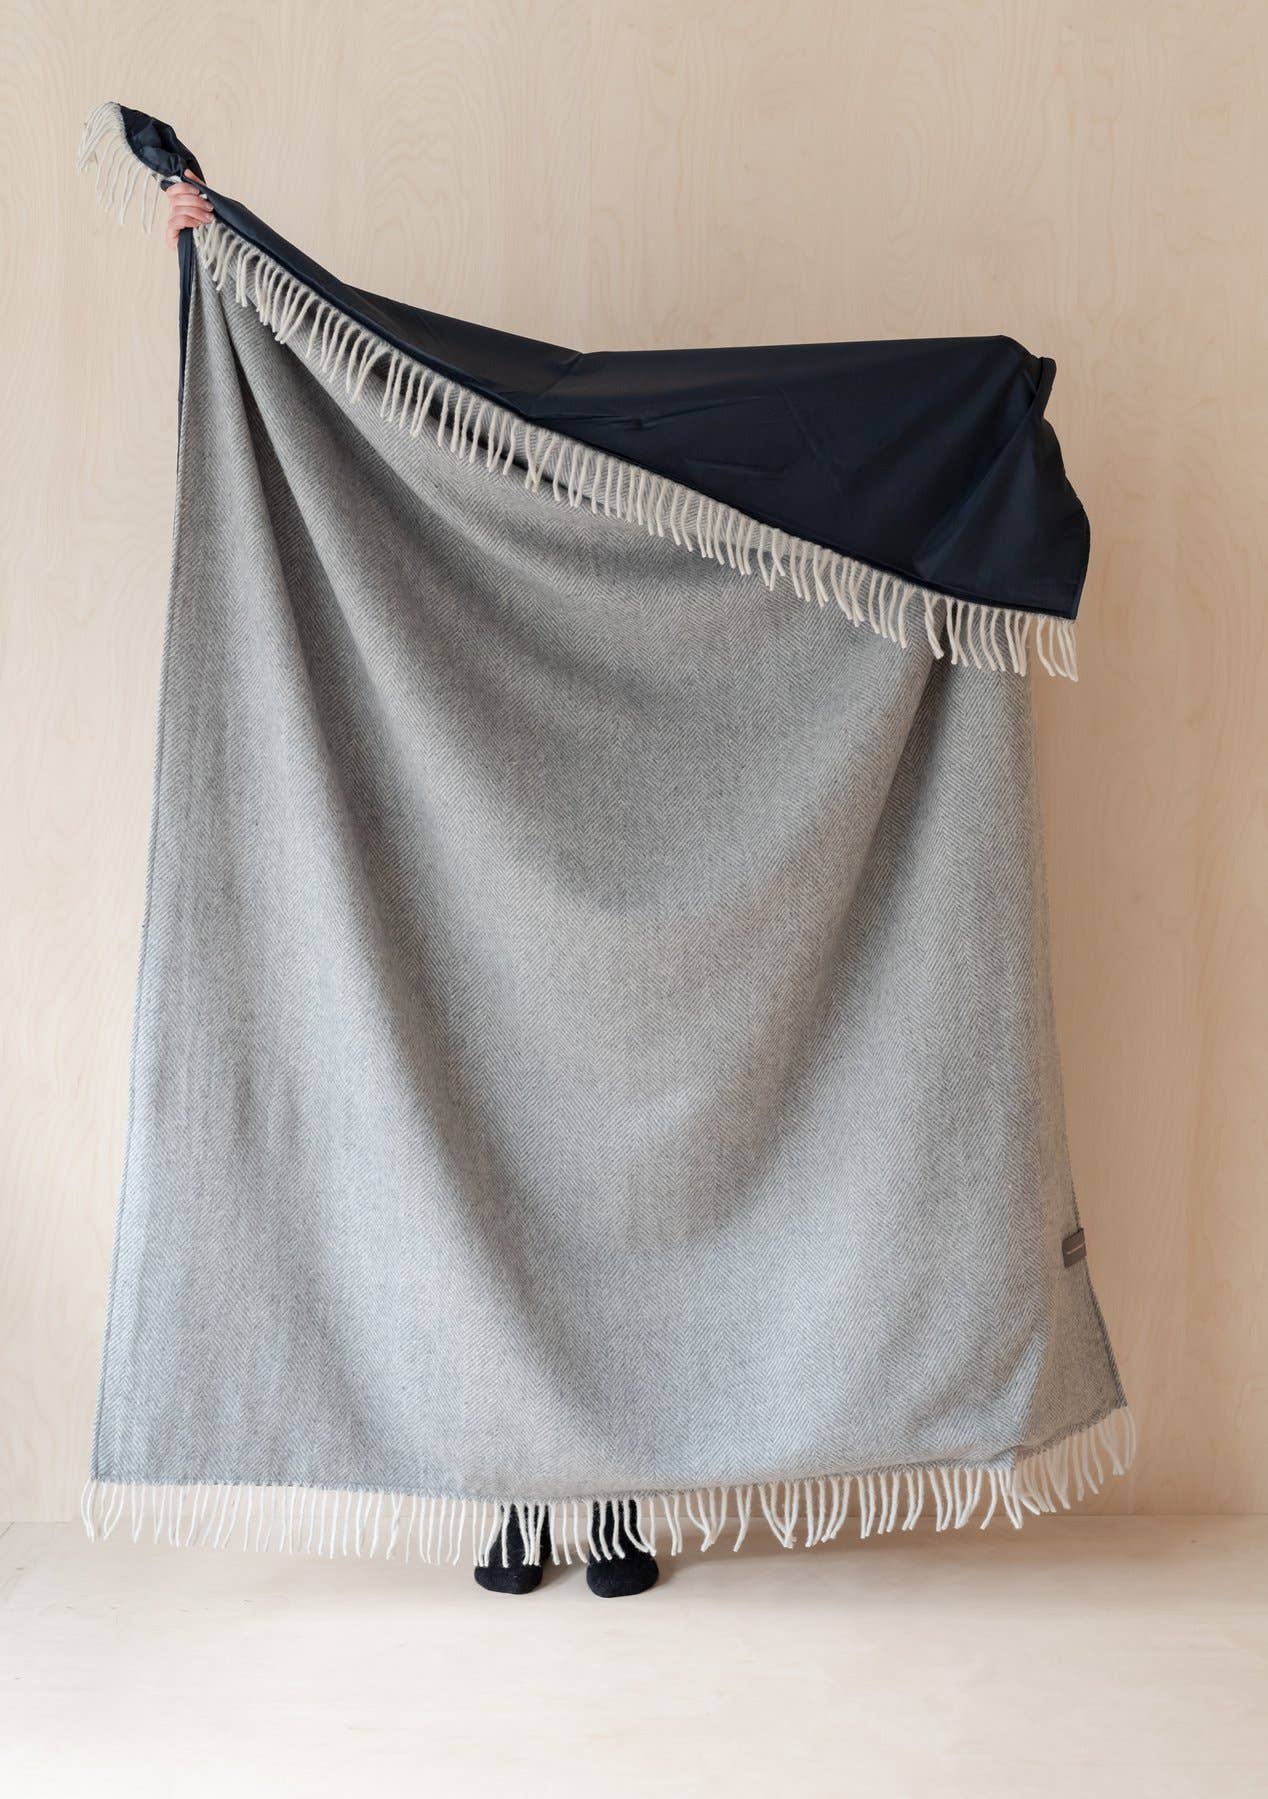 The Tartan Blanket Co. - Recycled Wool Picnic Blanket in Charcoal Grey Herringbone